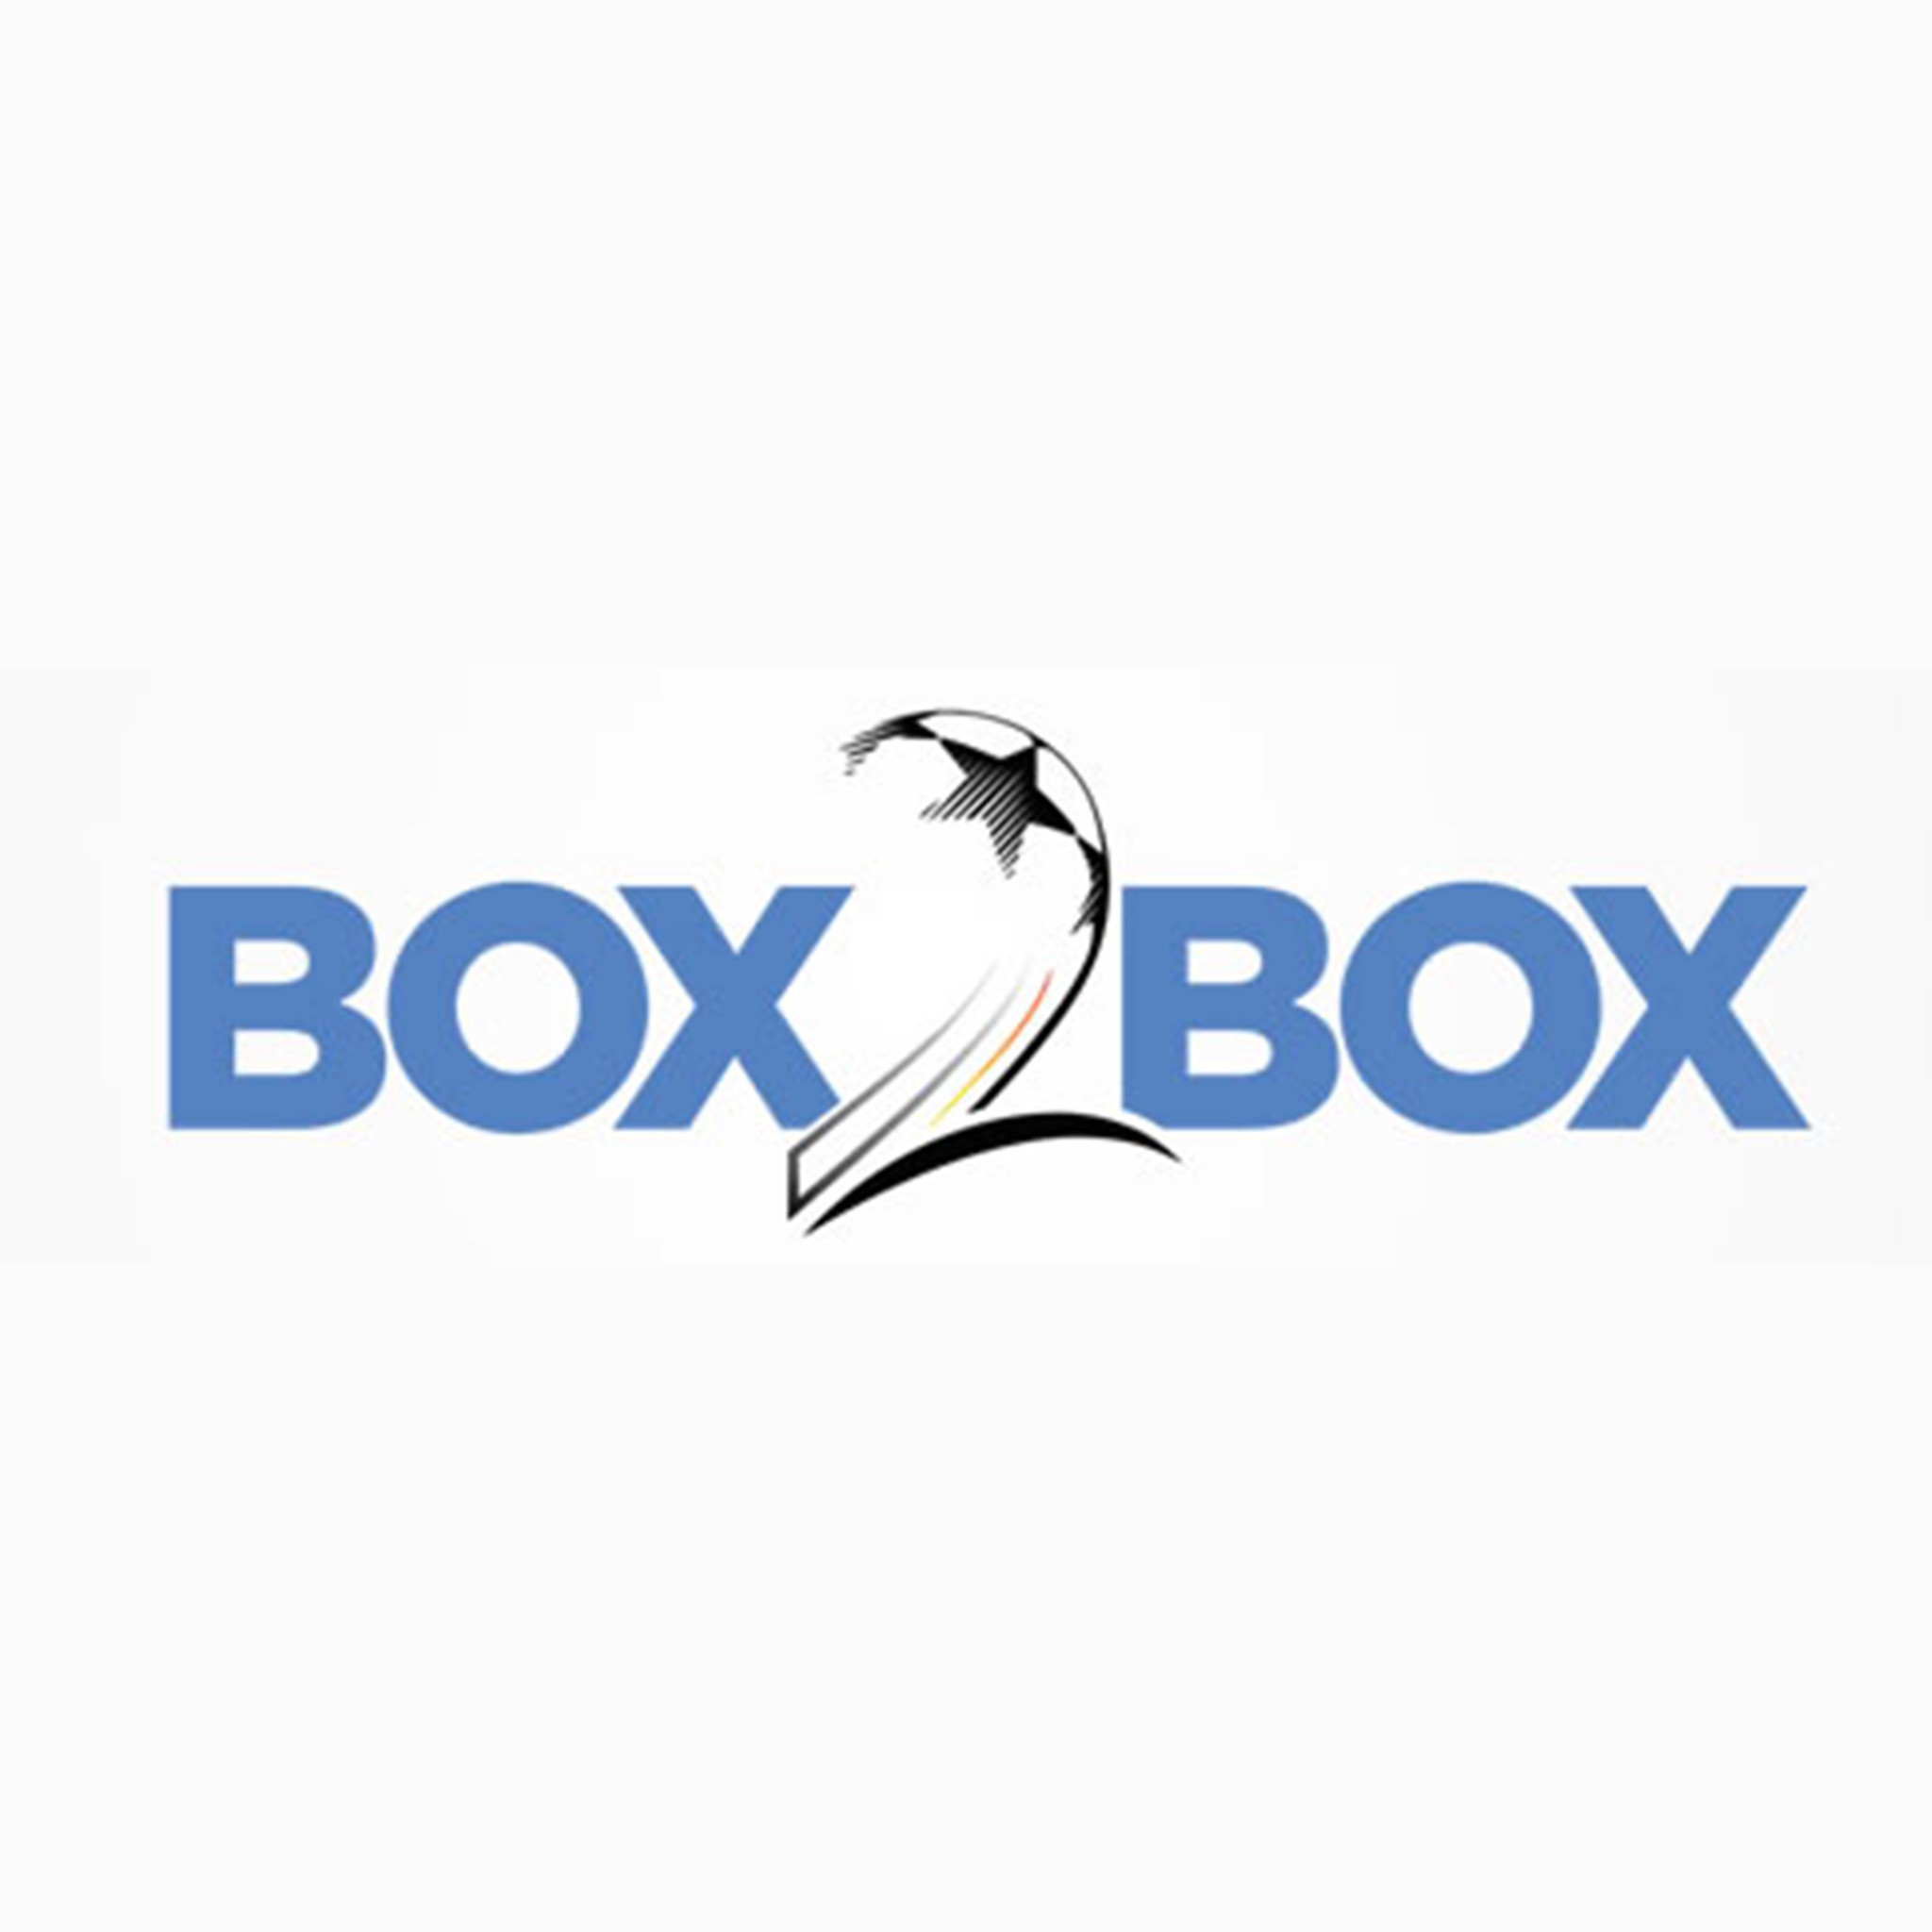 Box2Box Friday 29th April 2022 - A-League crunch time, Champions League semi-finals, Euro Leagues wrap